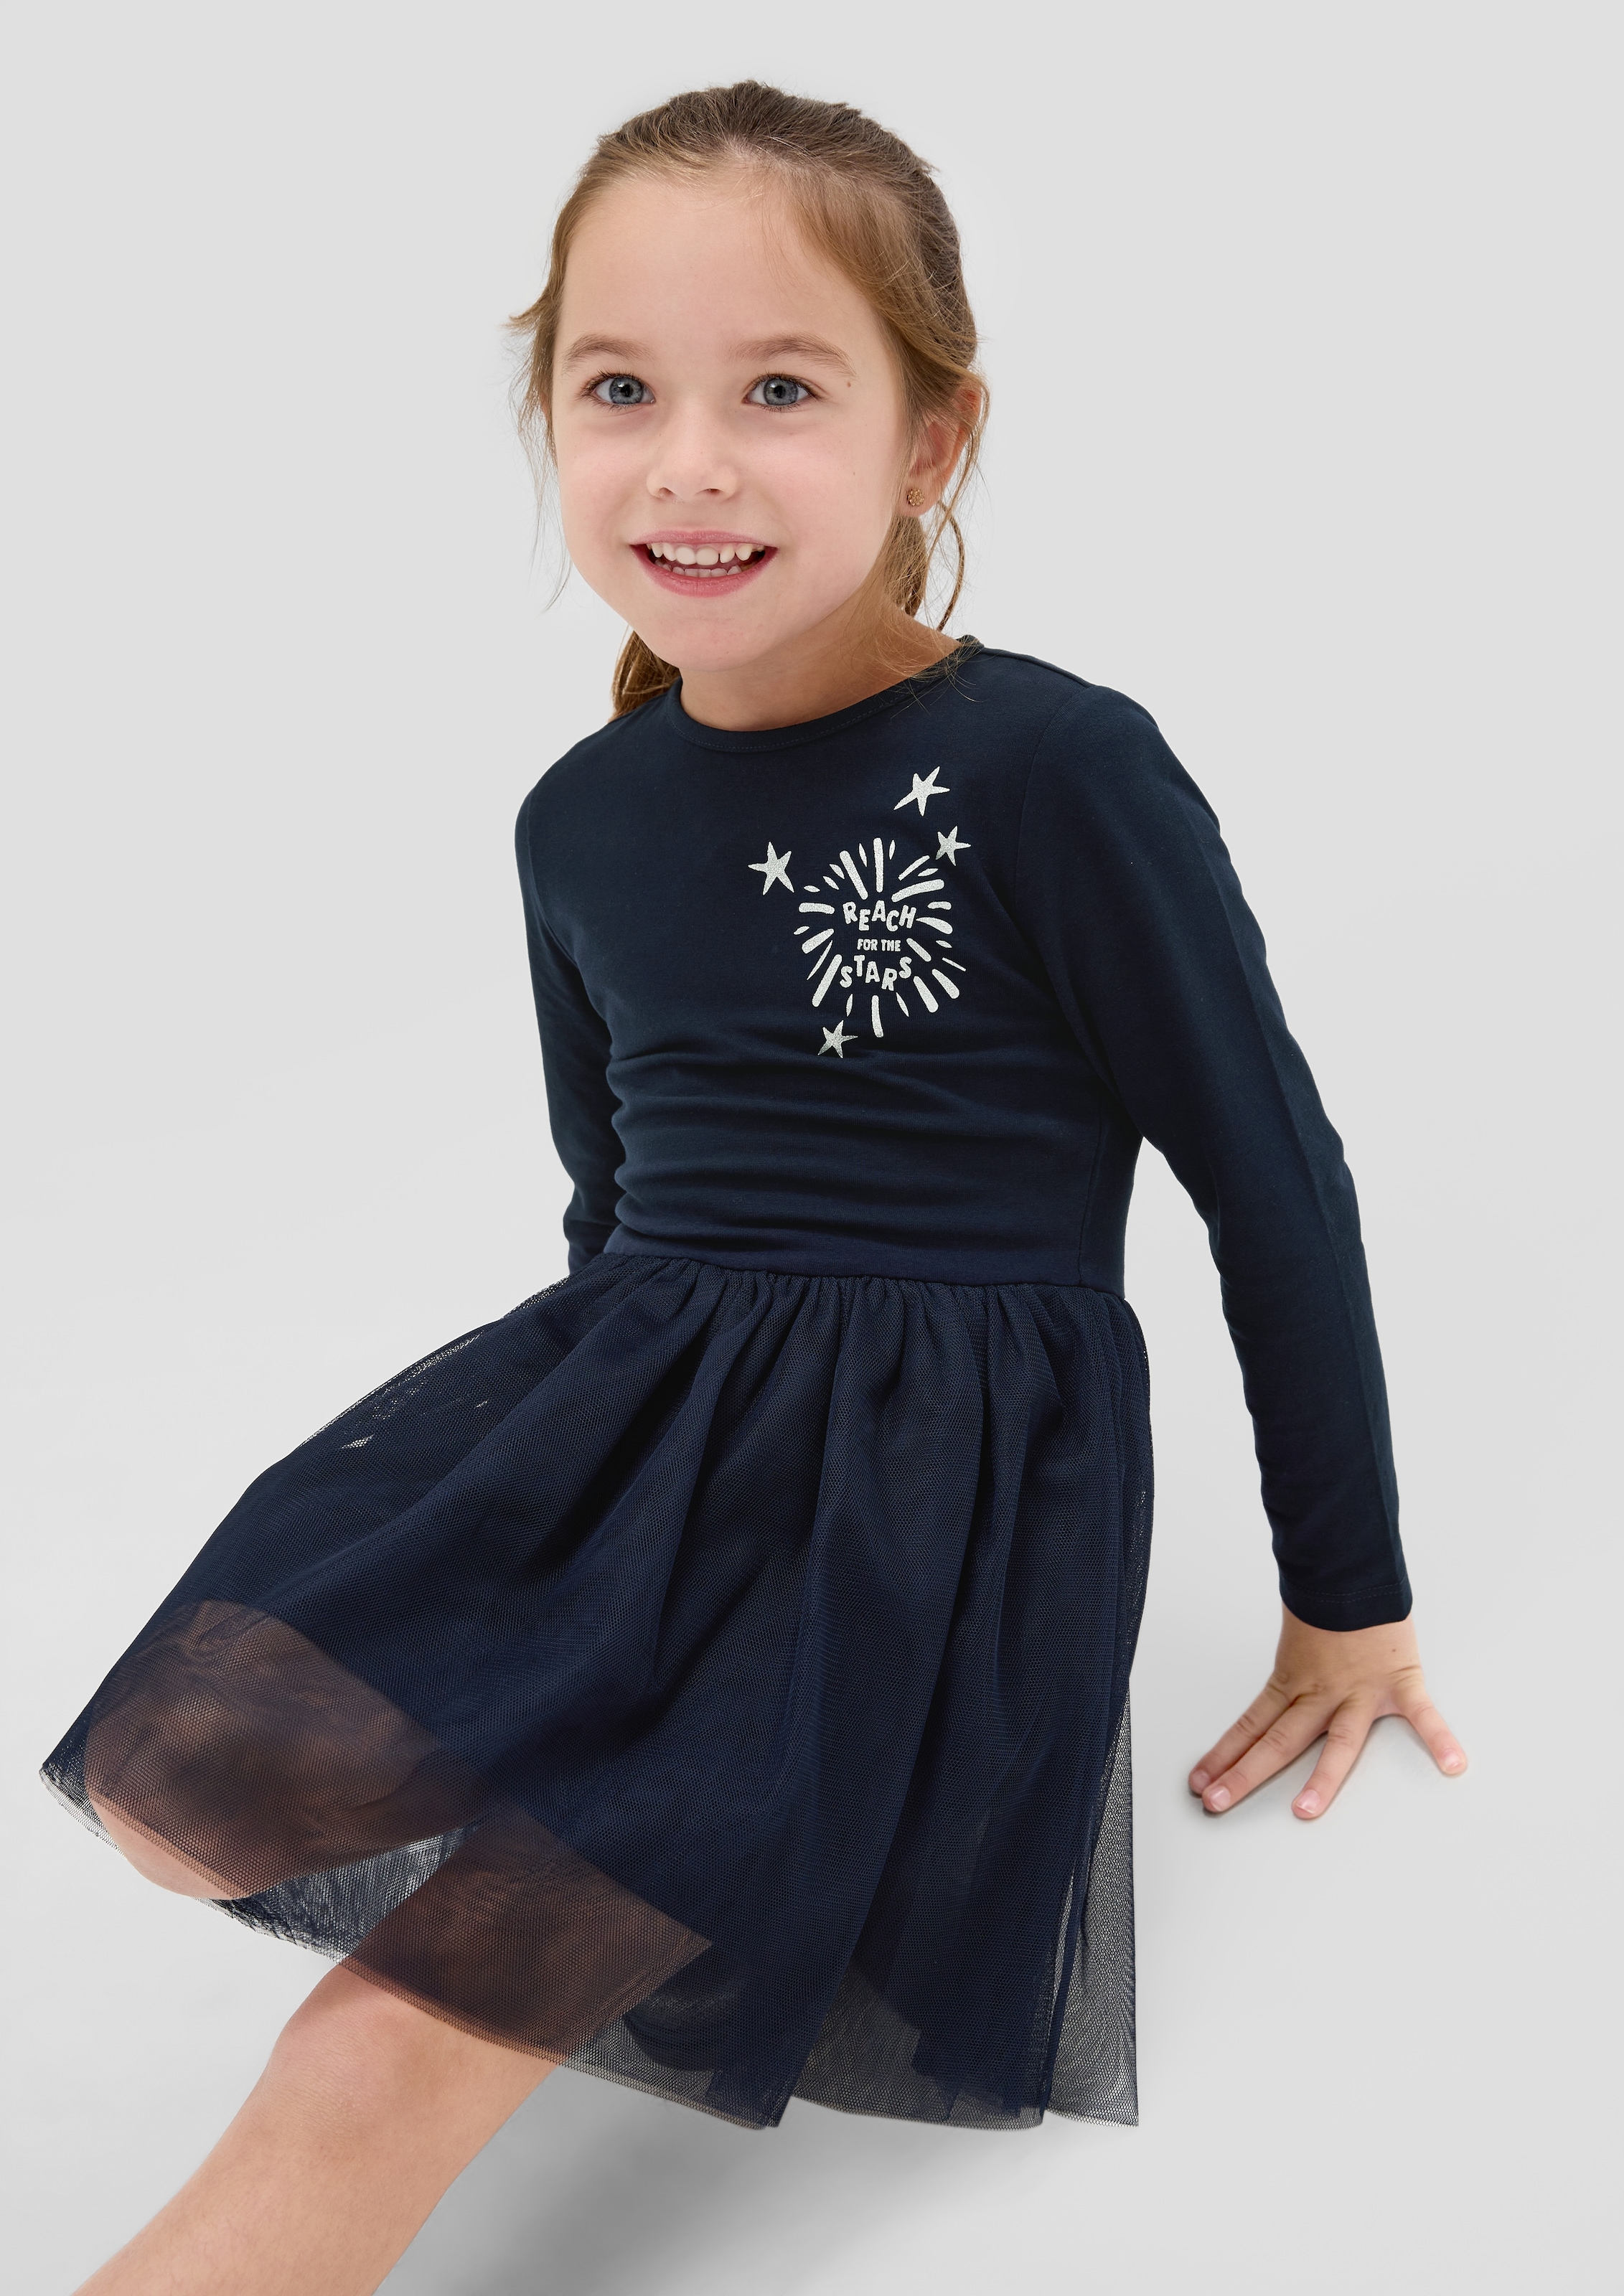 Jelmoli-Versand online s.Oliver Kinder-Mode kaufen bei